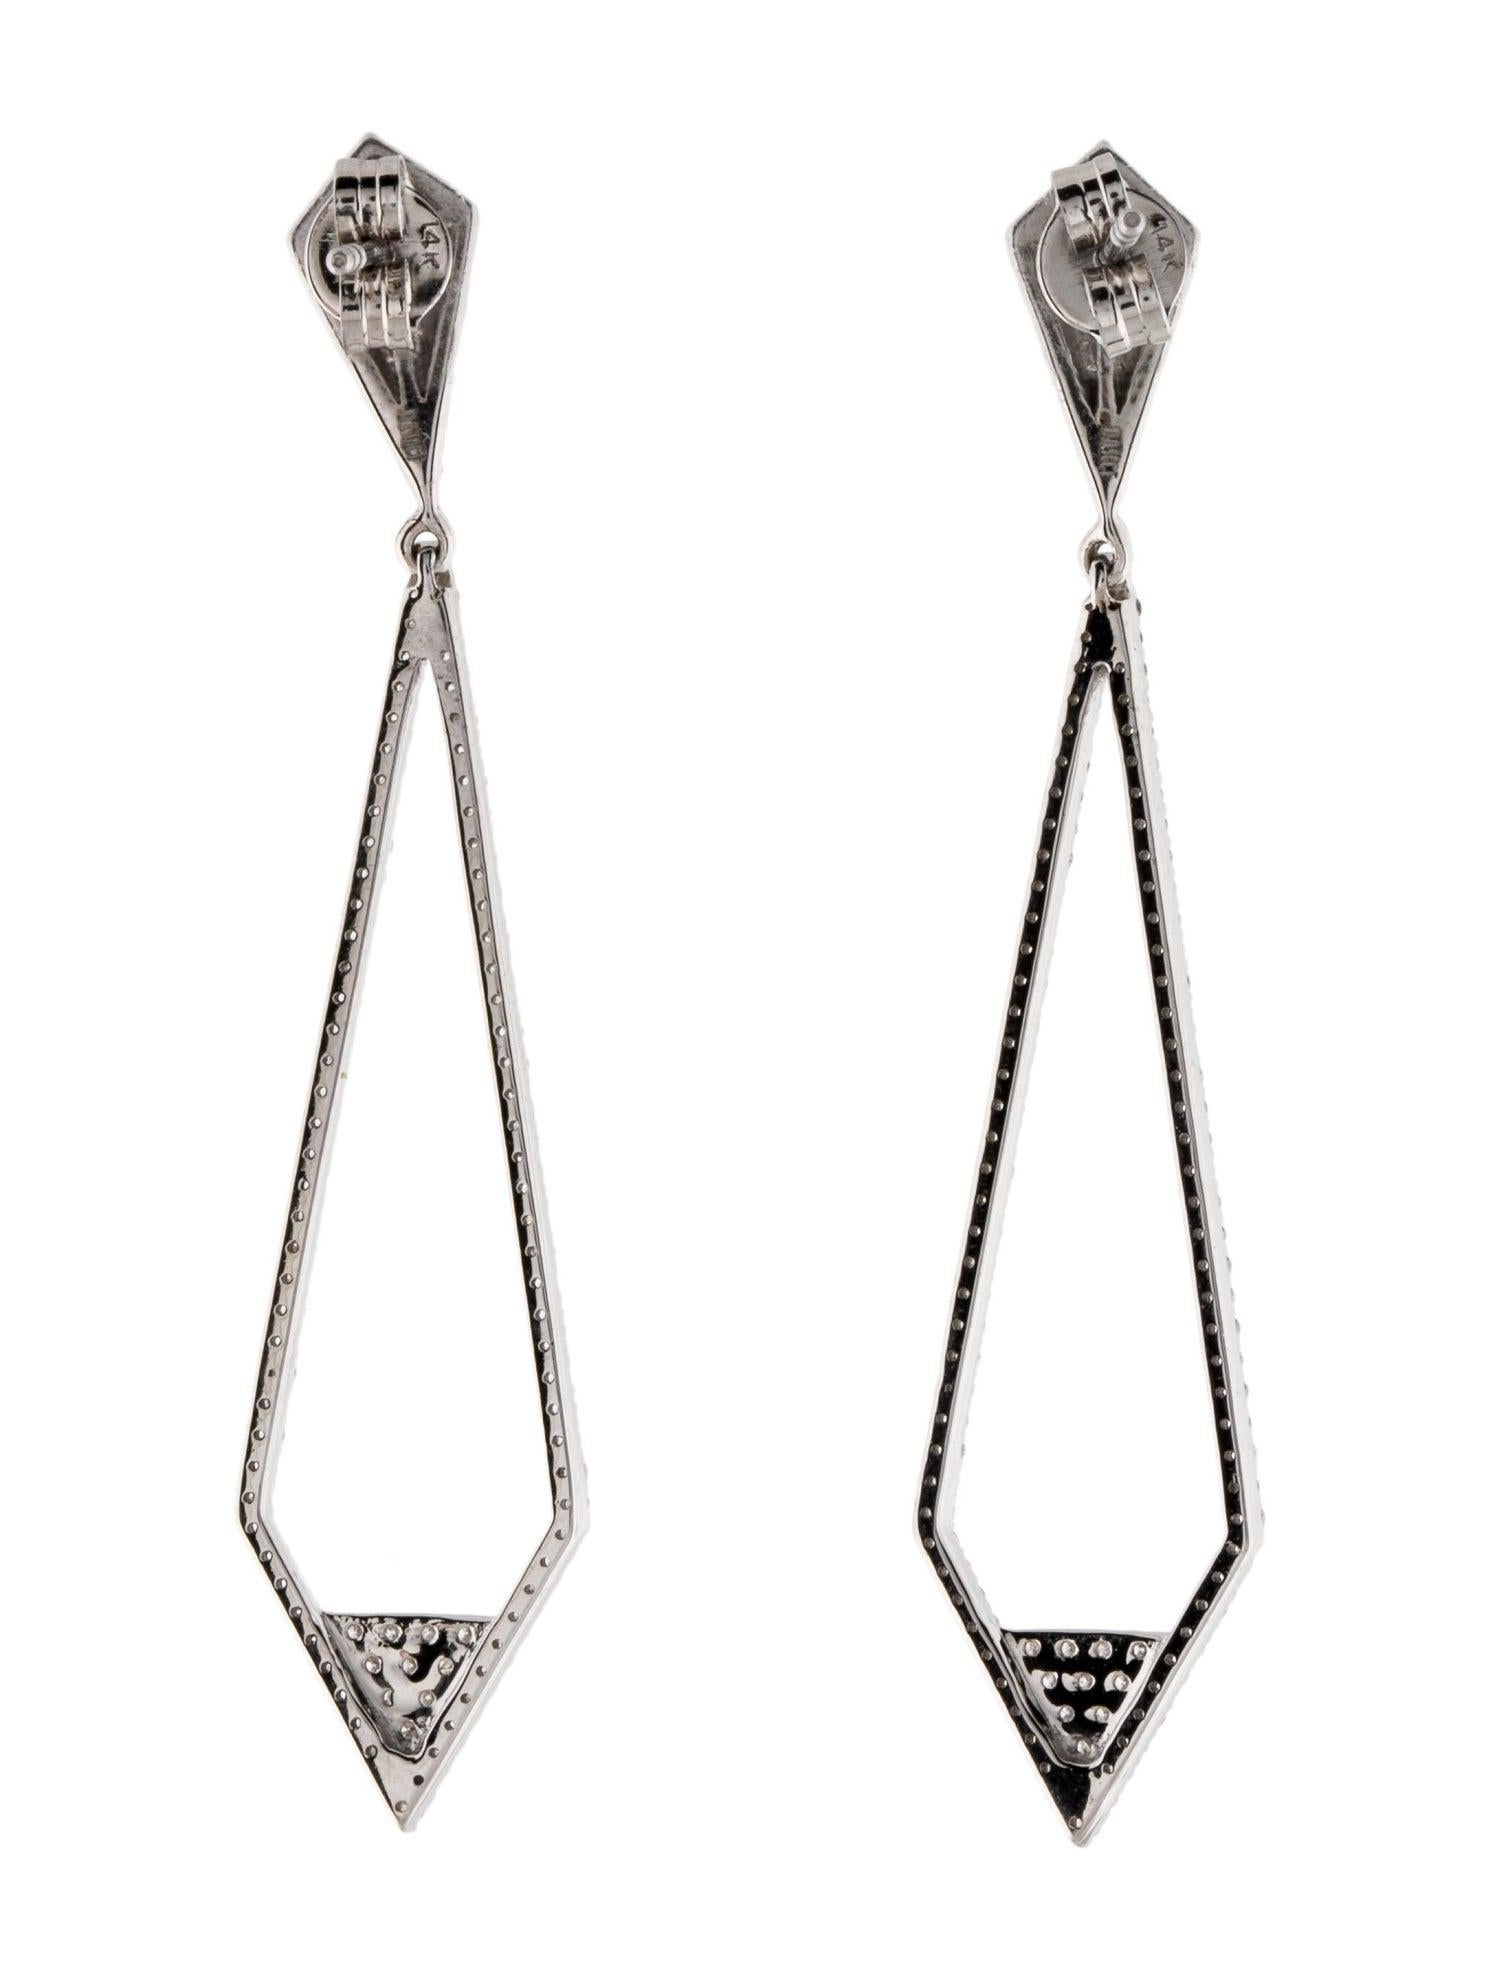 Brilliant Cut Stunning 14K Diamond Drop Earrings - 1.13ctw Sparkle & Style, Elegant Jewelry For Sale